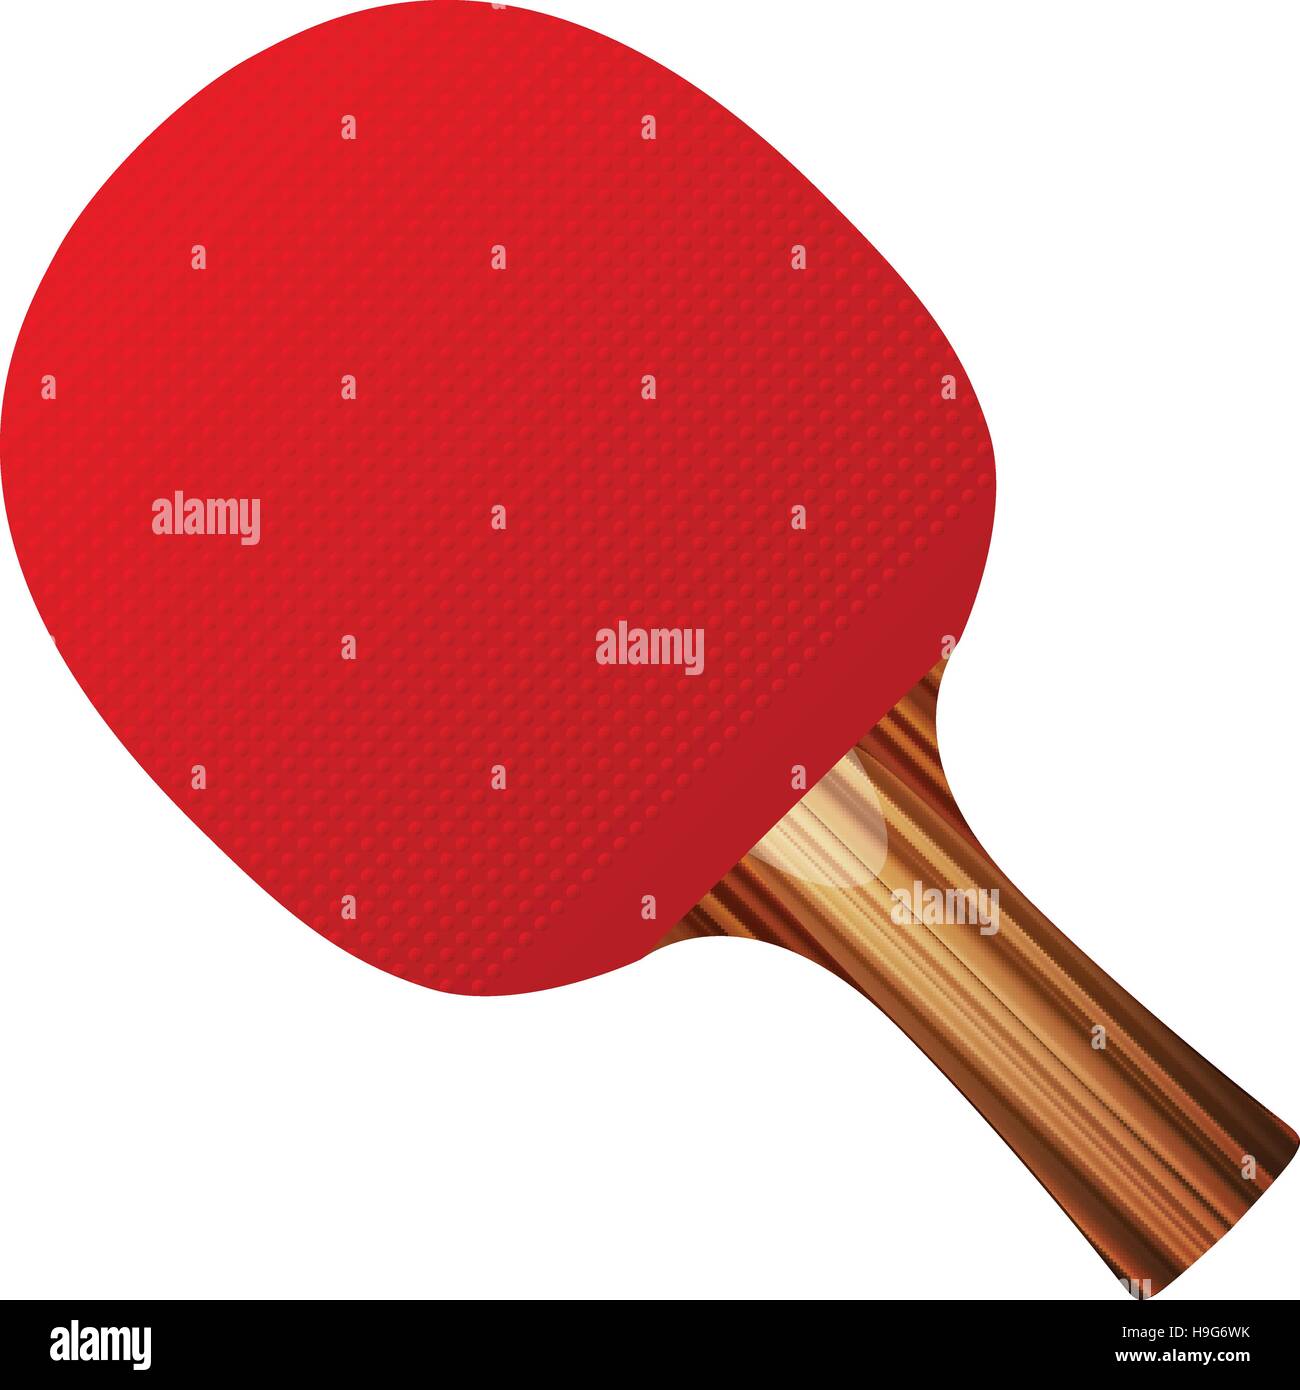 https://c8.alamy.com/comp/H9G6WK/table-tennis-bat-on-a-white-background-H9G6WK.jpg